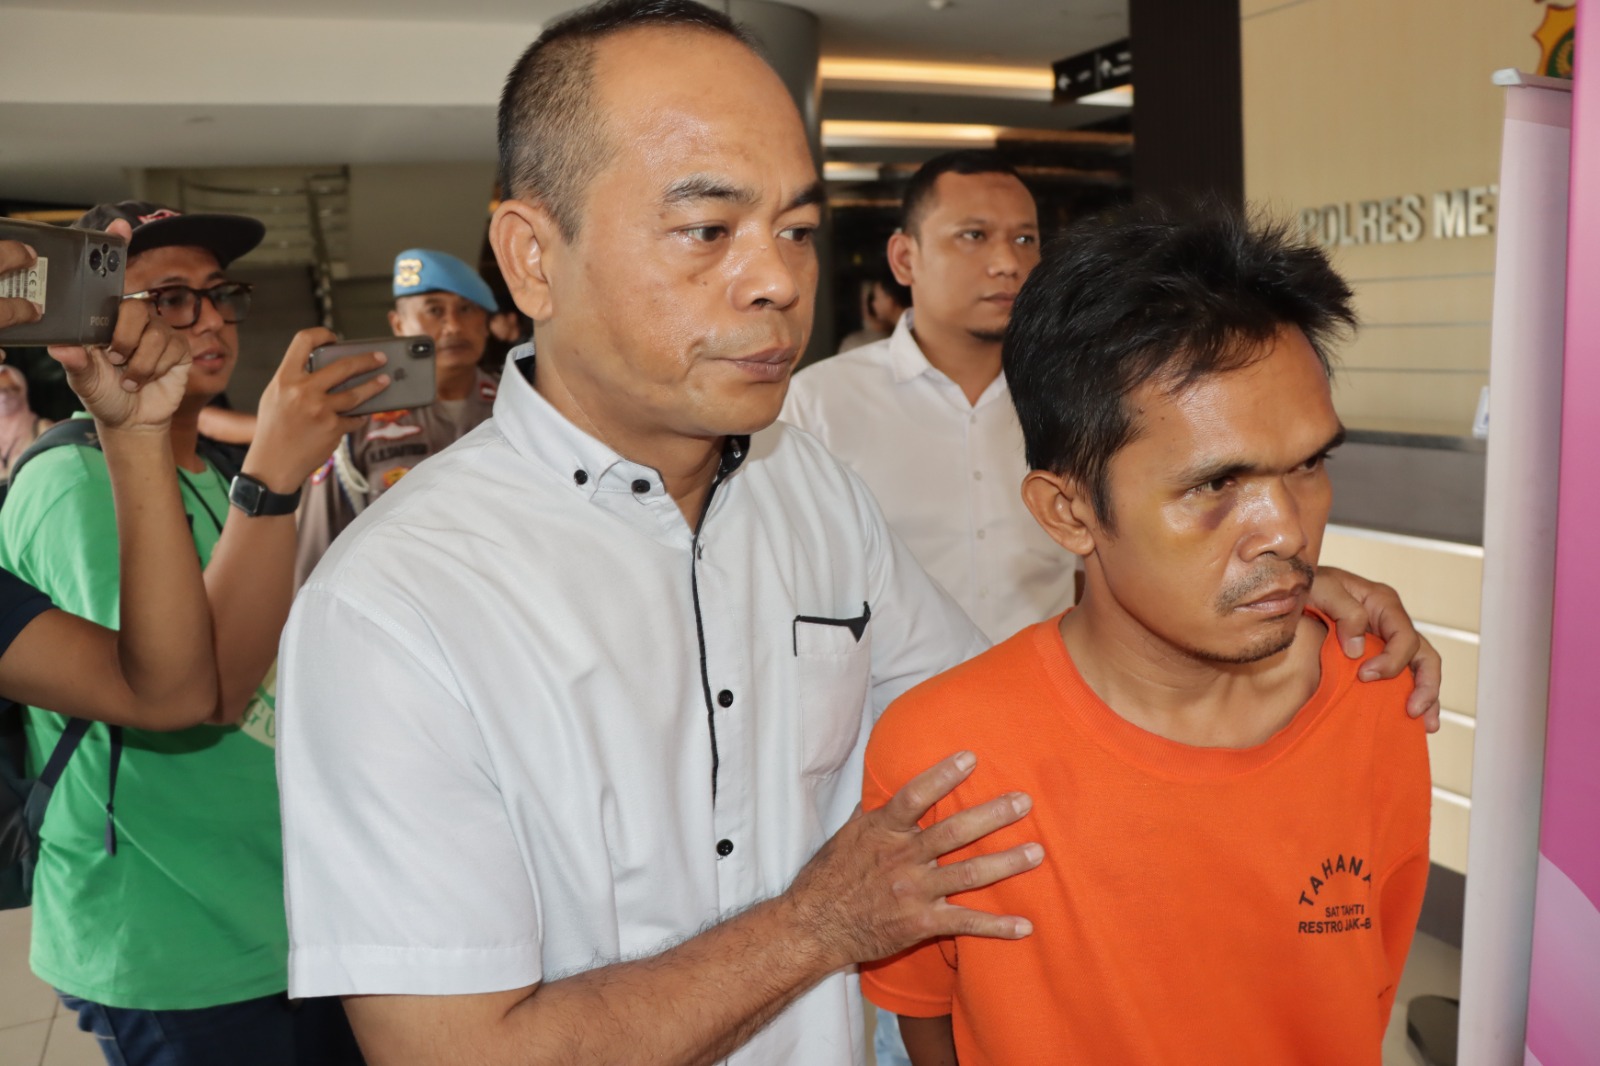 Cabuli 2 Anak di Kota Bambu, Pedagang Jasuke Terancam Hukuman Penjara 20 Tahun